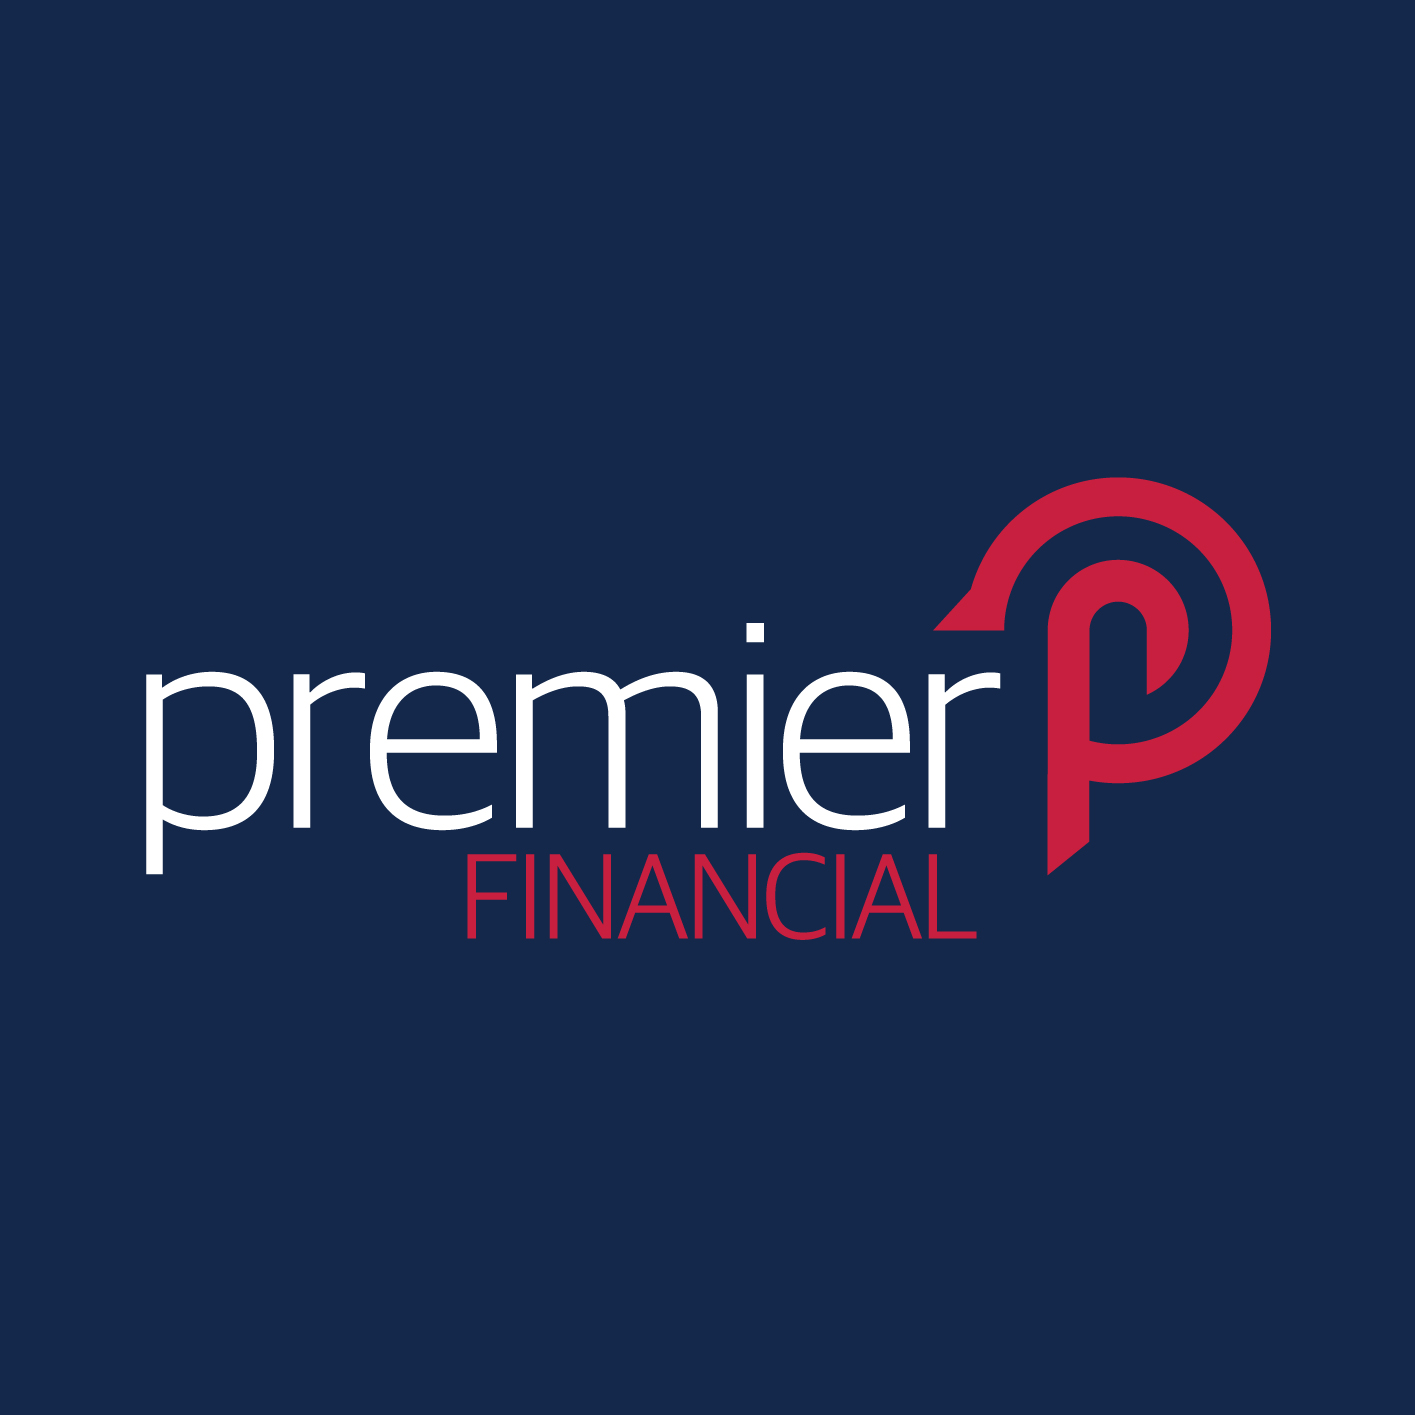 Premier Financial – Trusted Advisor